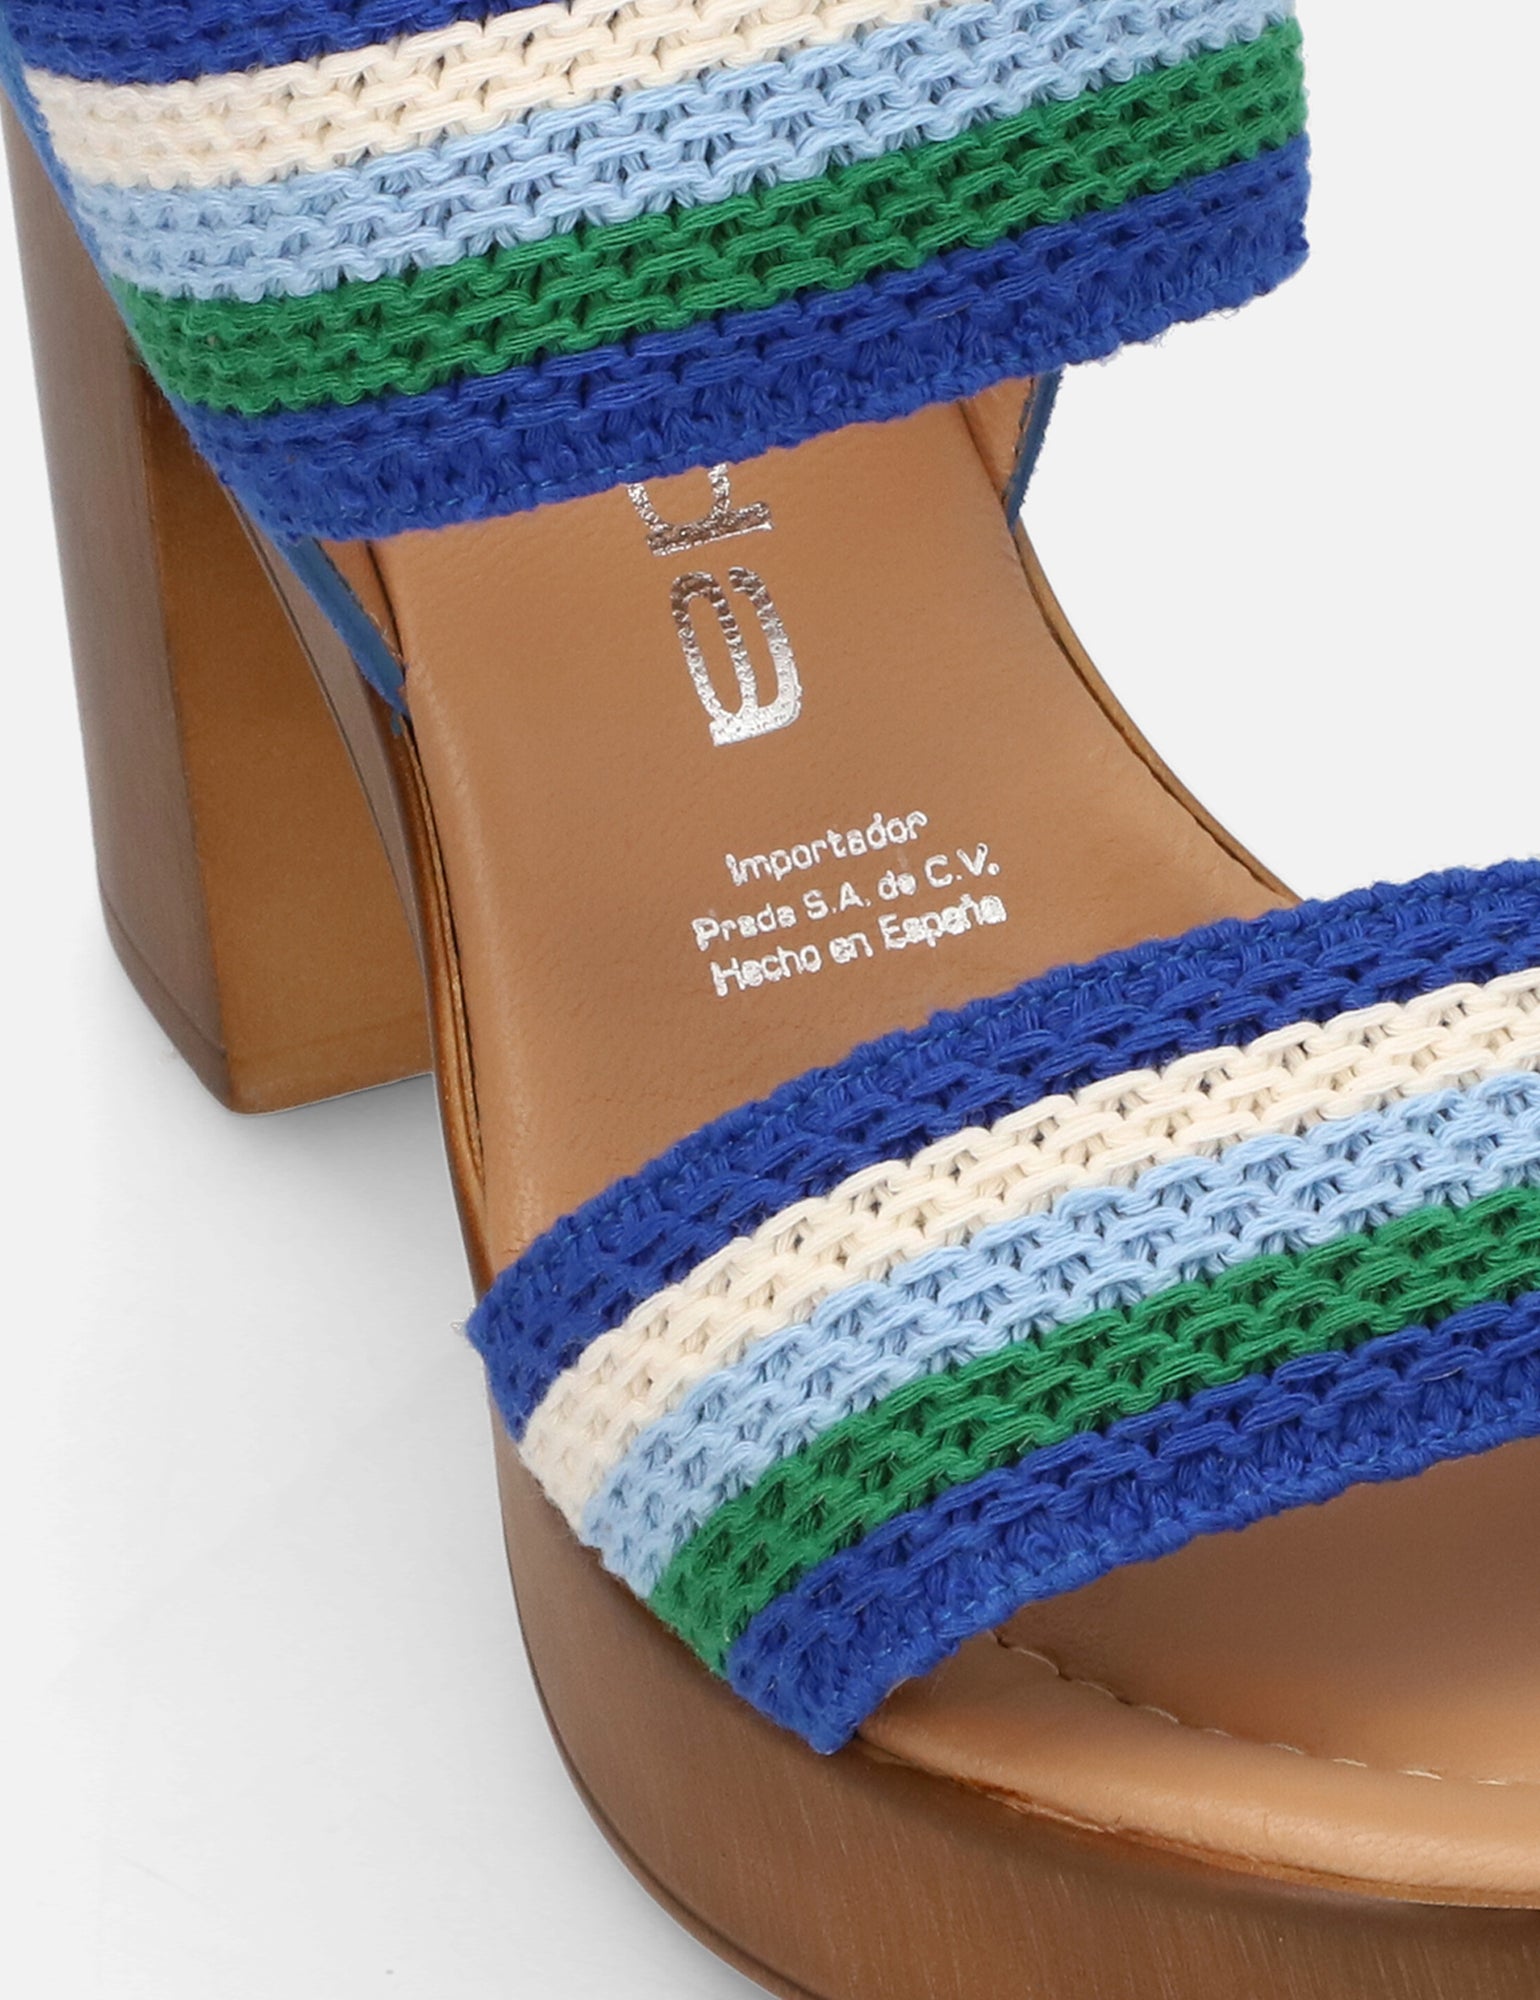 Sandalia con tiras apariencia crochet azul